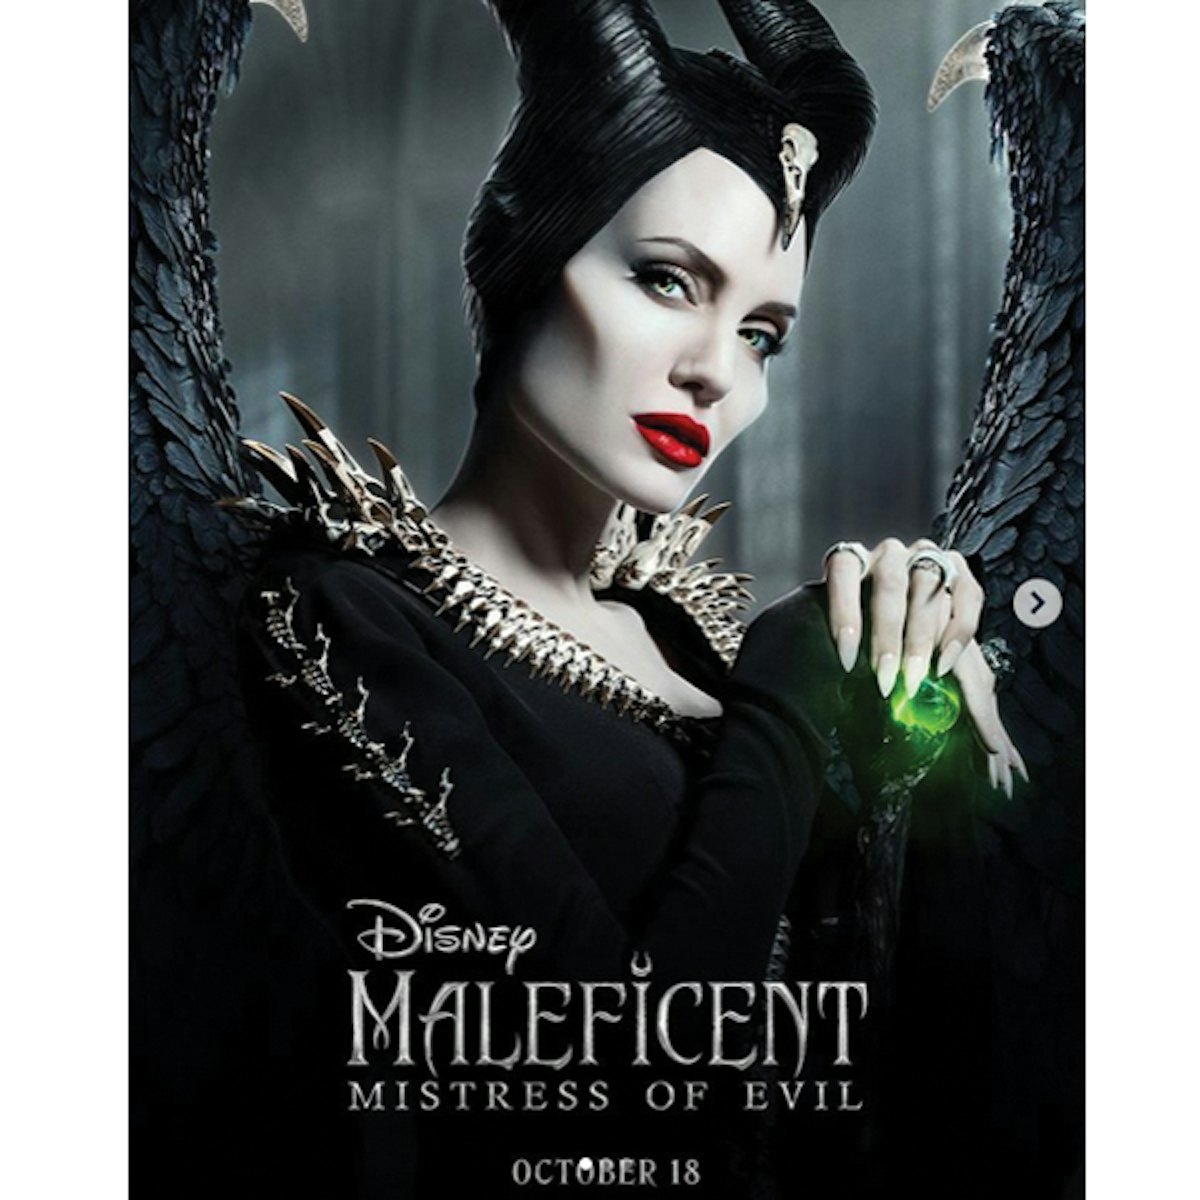 maleficent 2022 movie poster